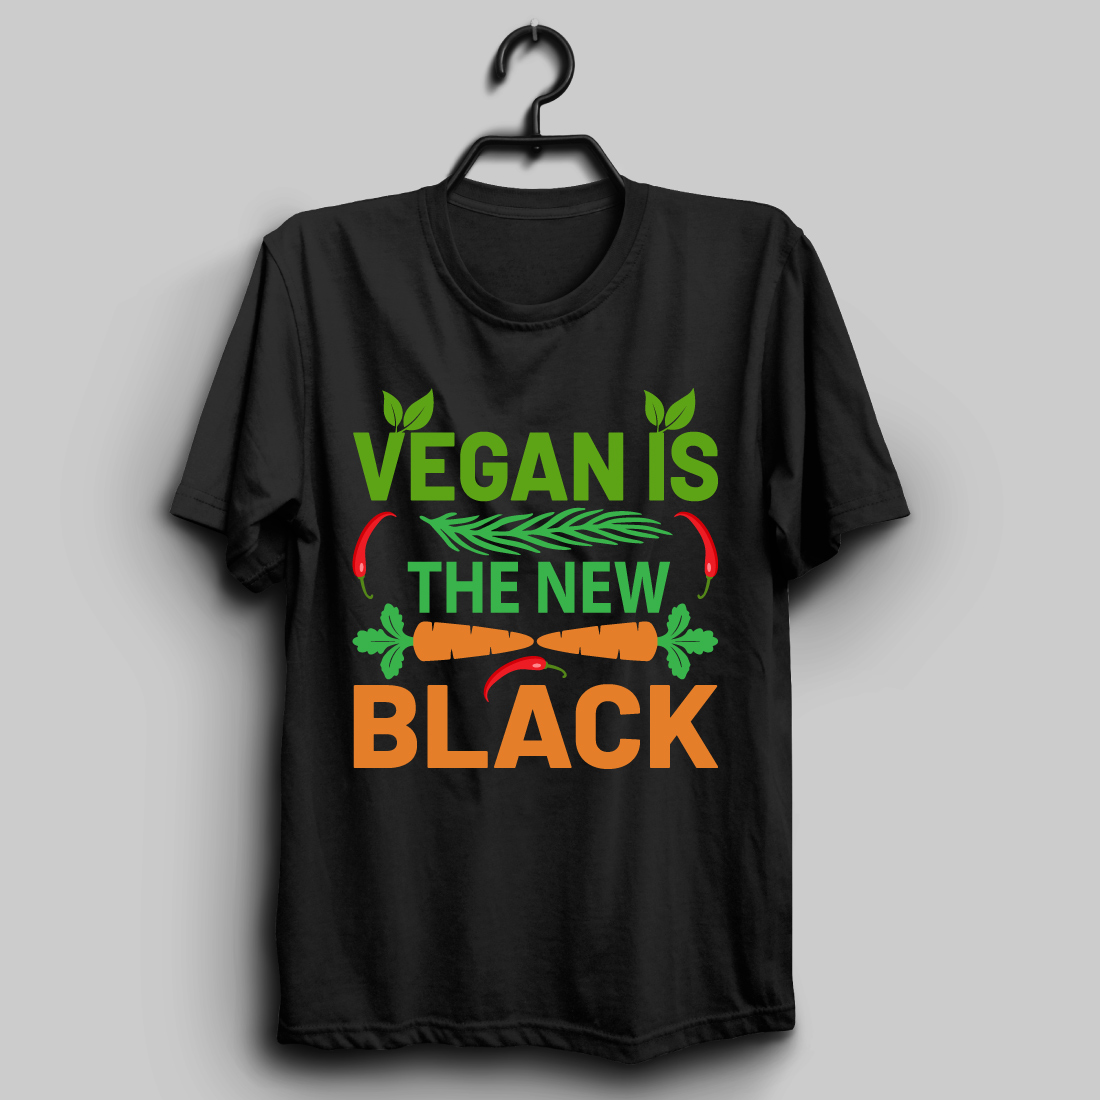 world vegan day t shirt design05 261